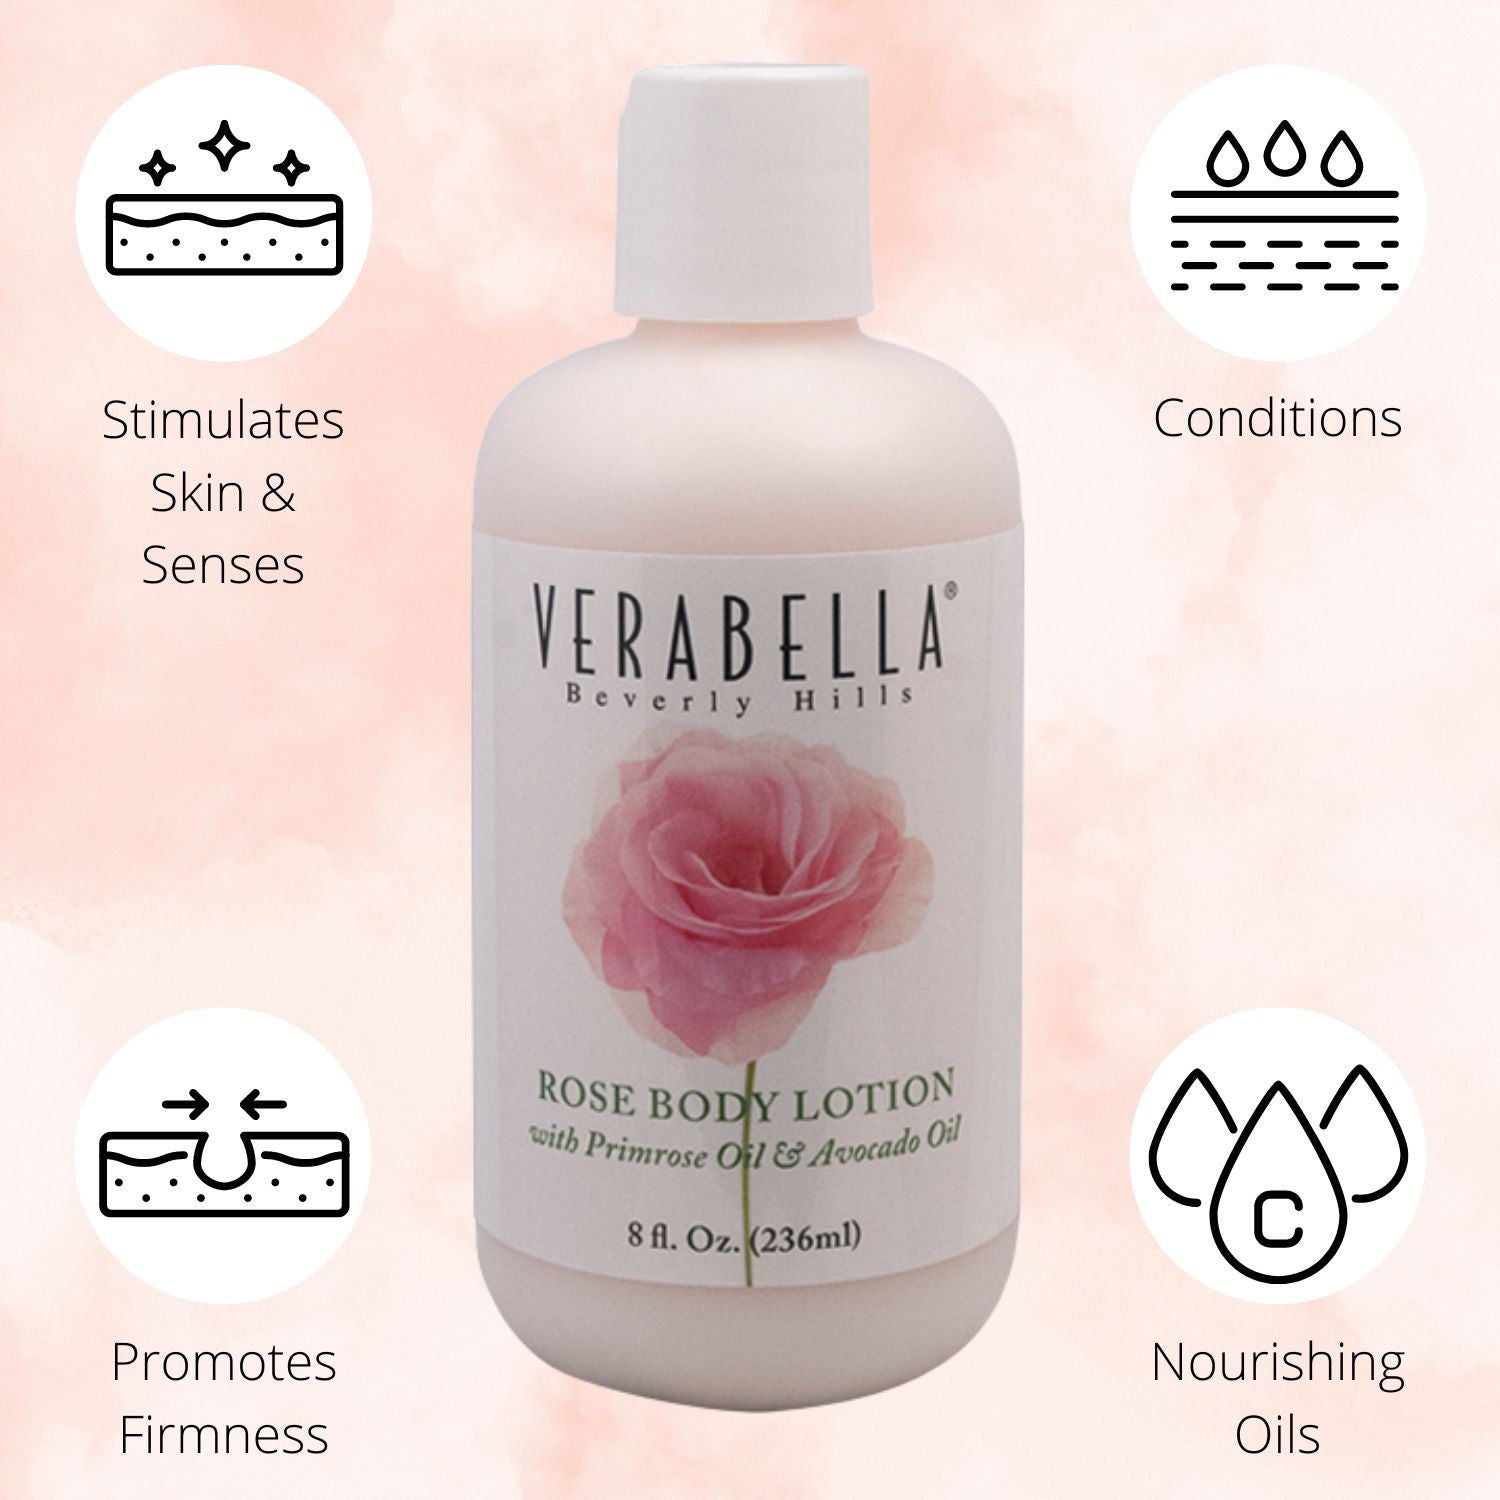 Verabella Rose Body Lotion stimulates skin and senses with nourishing oils